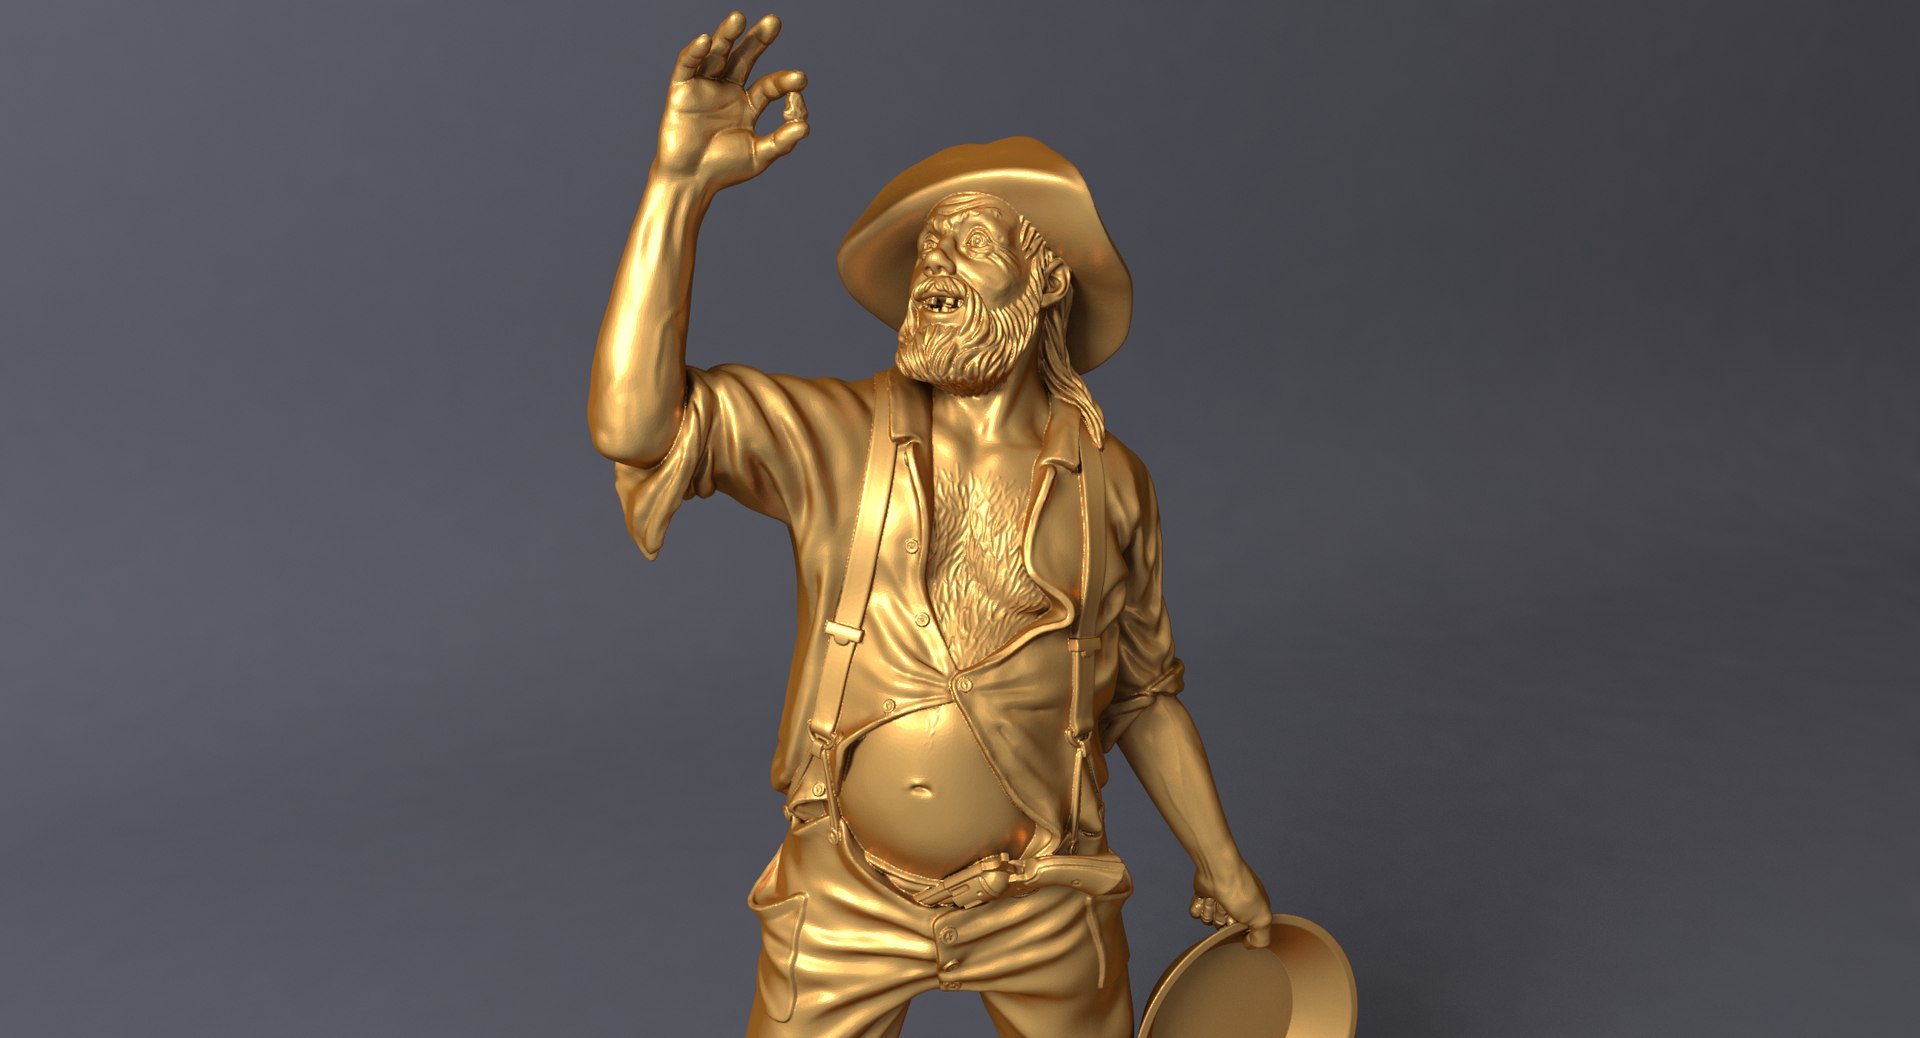 3d model gold digger figurine https://p.turbosquid.com/ts-thumb/gY/l8Uz3h/wISRTAay/mainview02/jpg/1454242465/1920x1080/fit_q87/20828309c678da9131b020e500b4f43489ac908d/mainview02.jpg